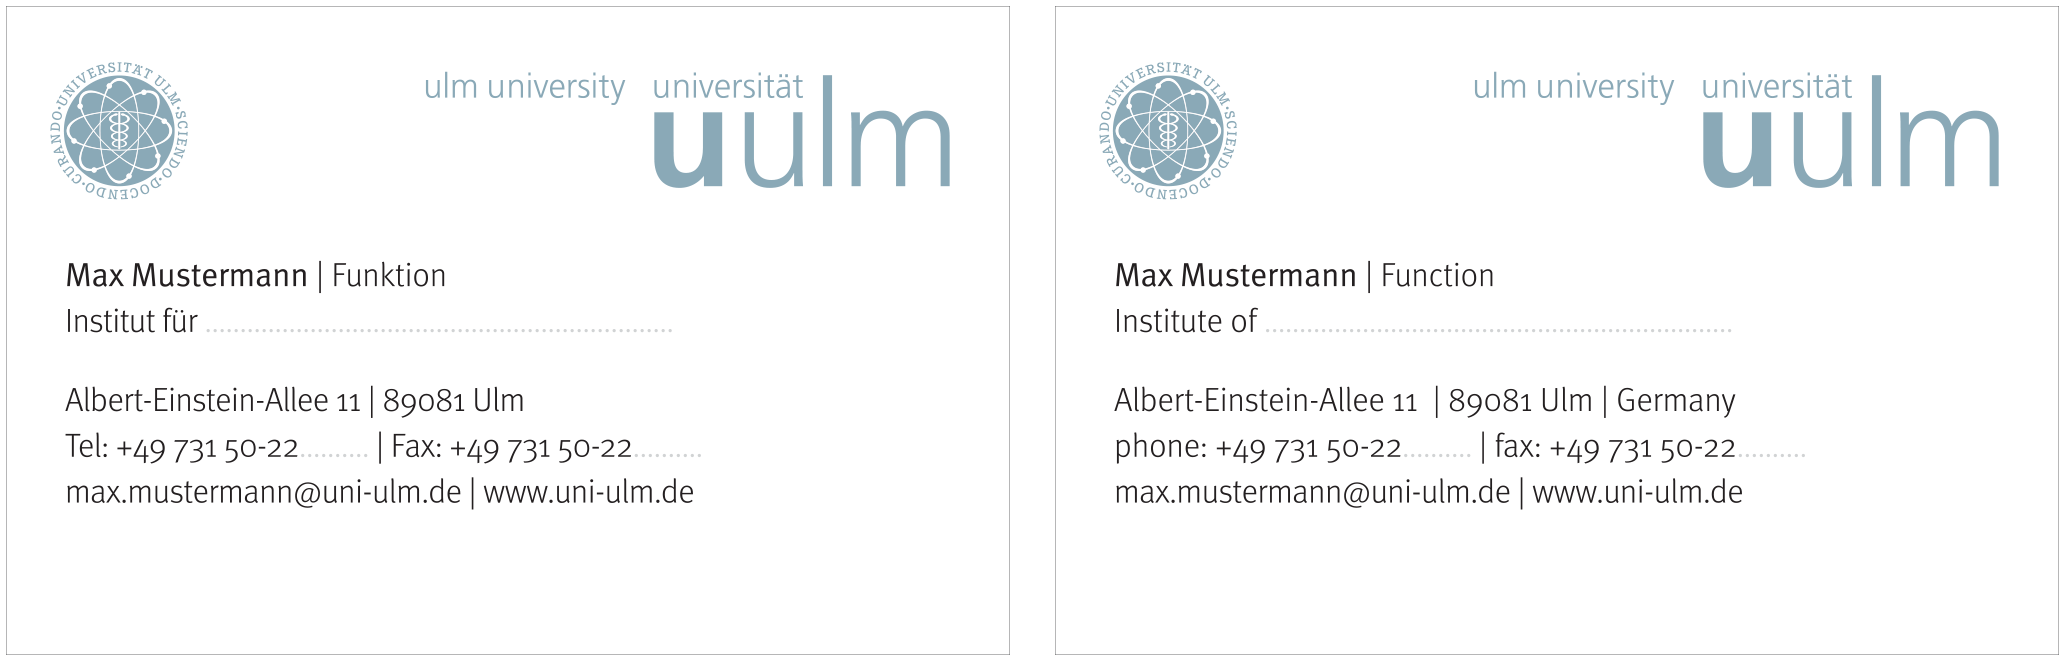 Bilinguale Mustervisitenkarte der Universität Ulm